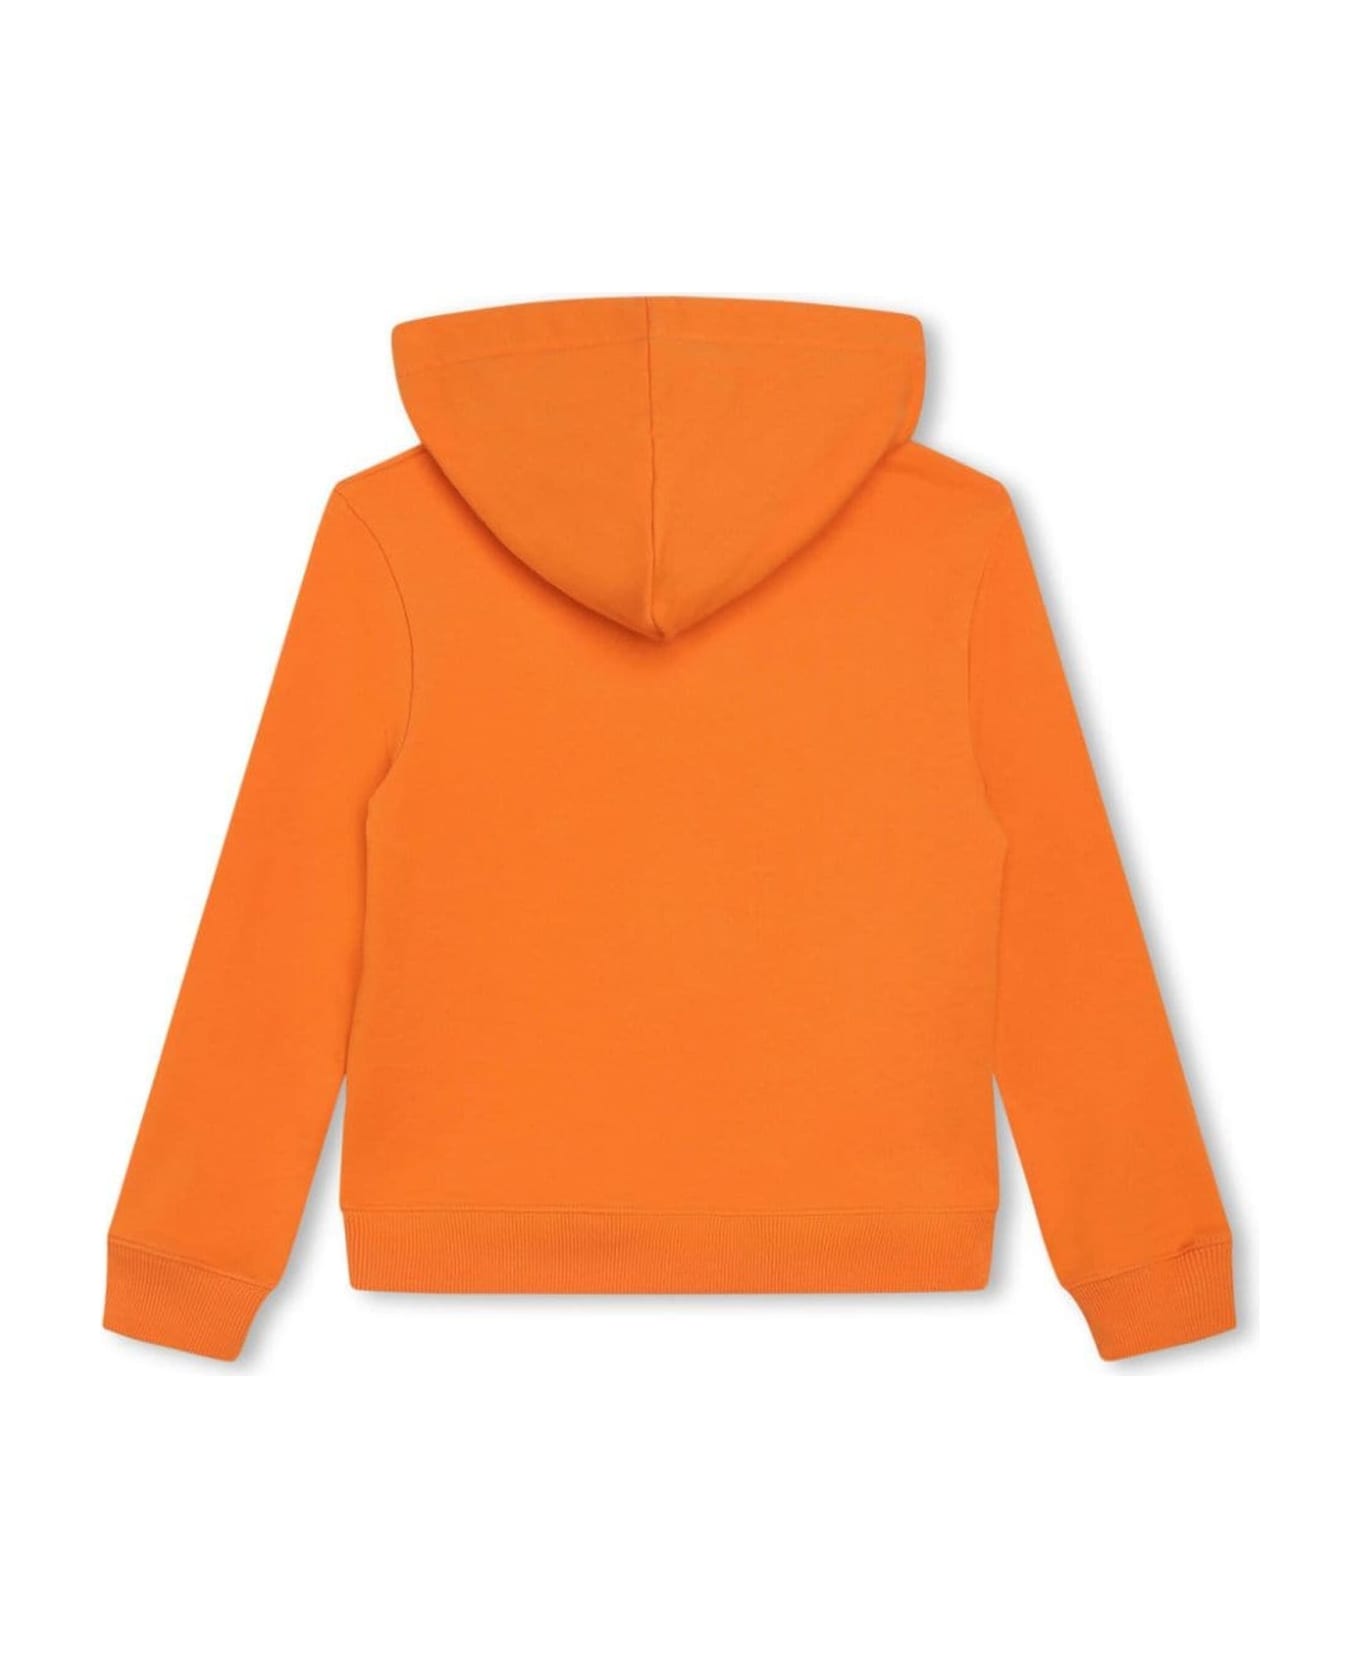 Lanvin Sweaters Orange - Orange